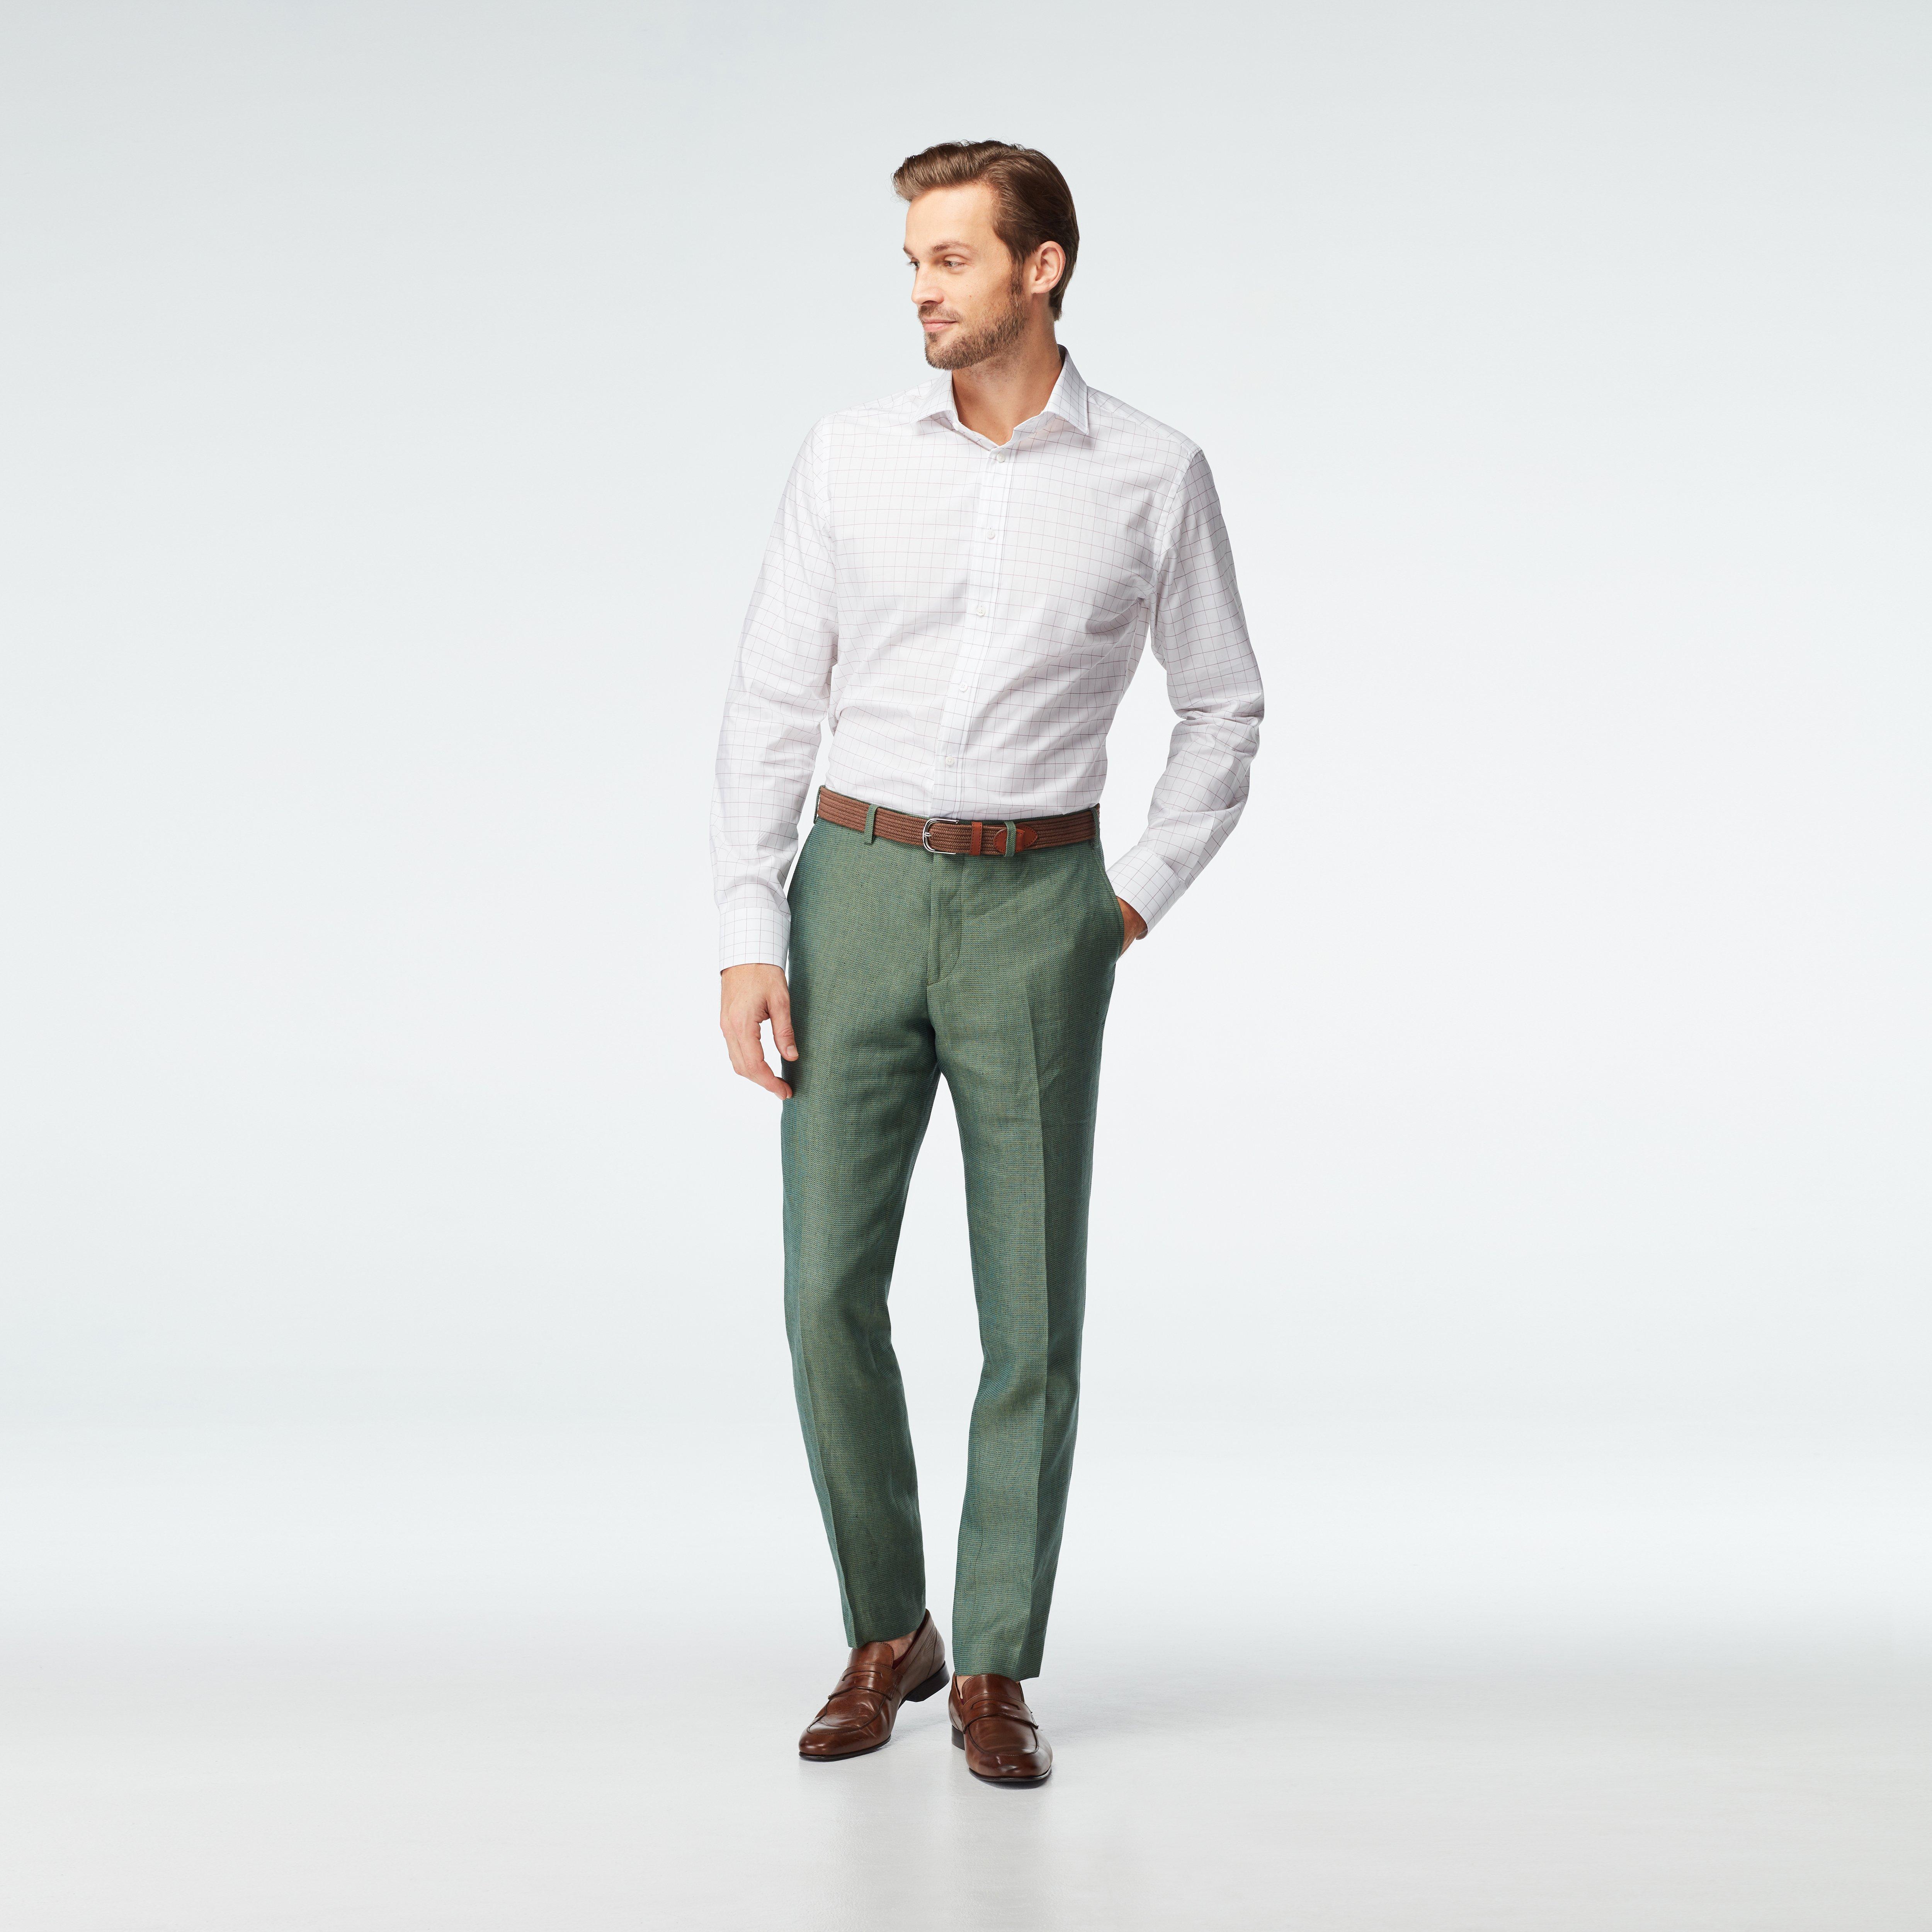 Sailsbury Linen Green pants